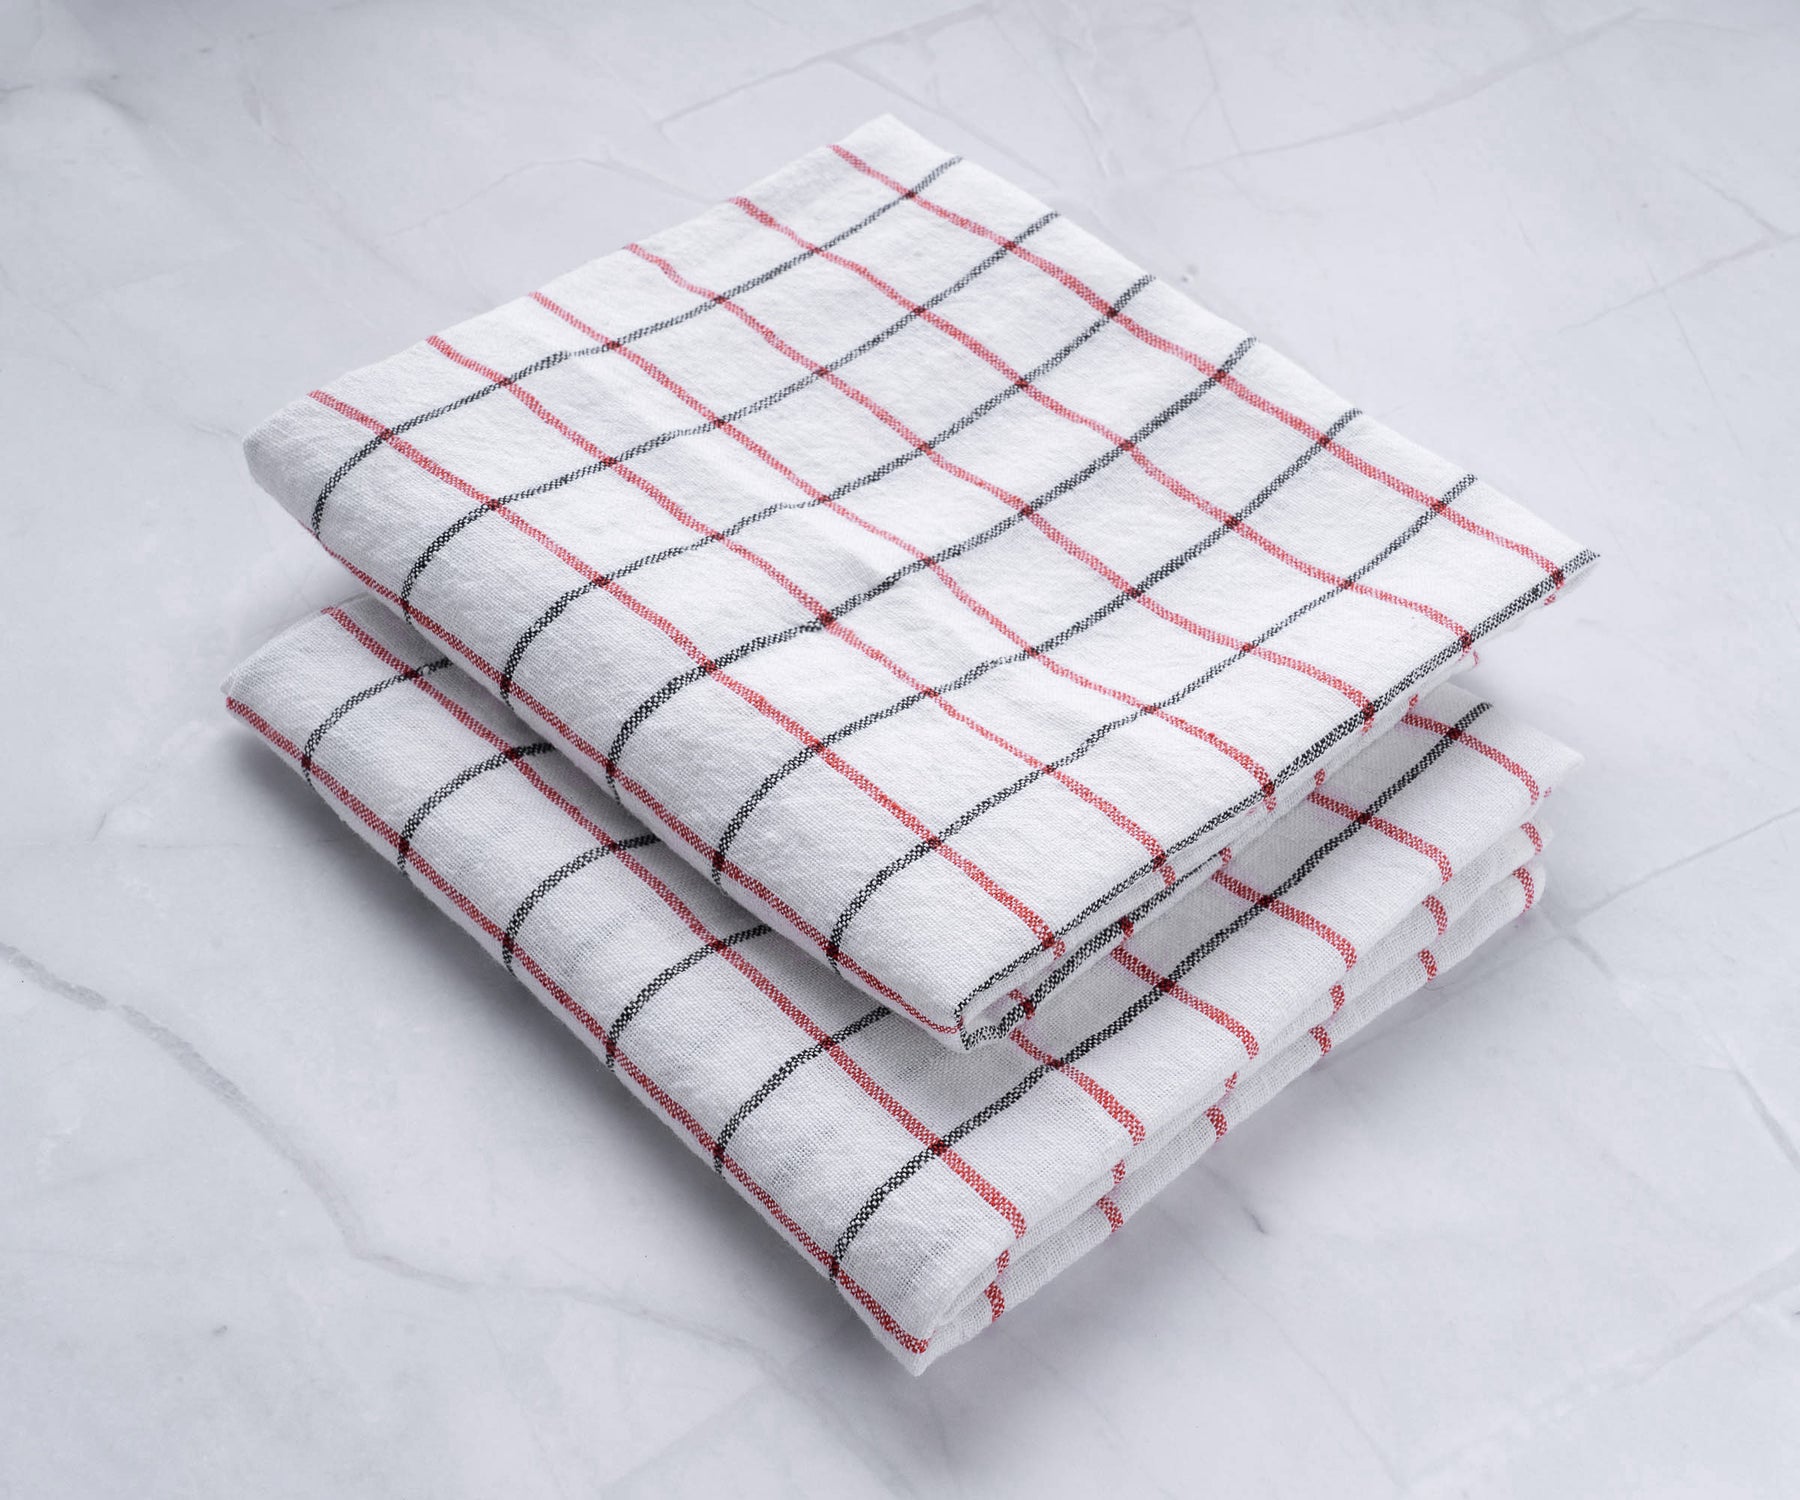 Simply Styled Season Black and White Buffalo Plaid Tea Towel Set of 2